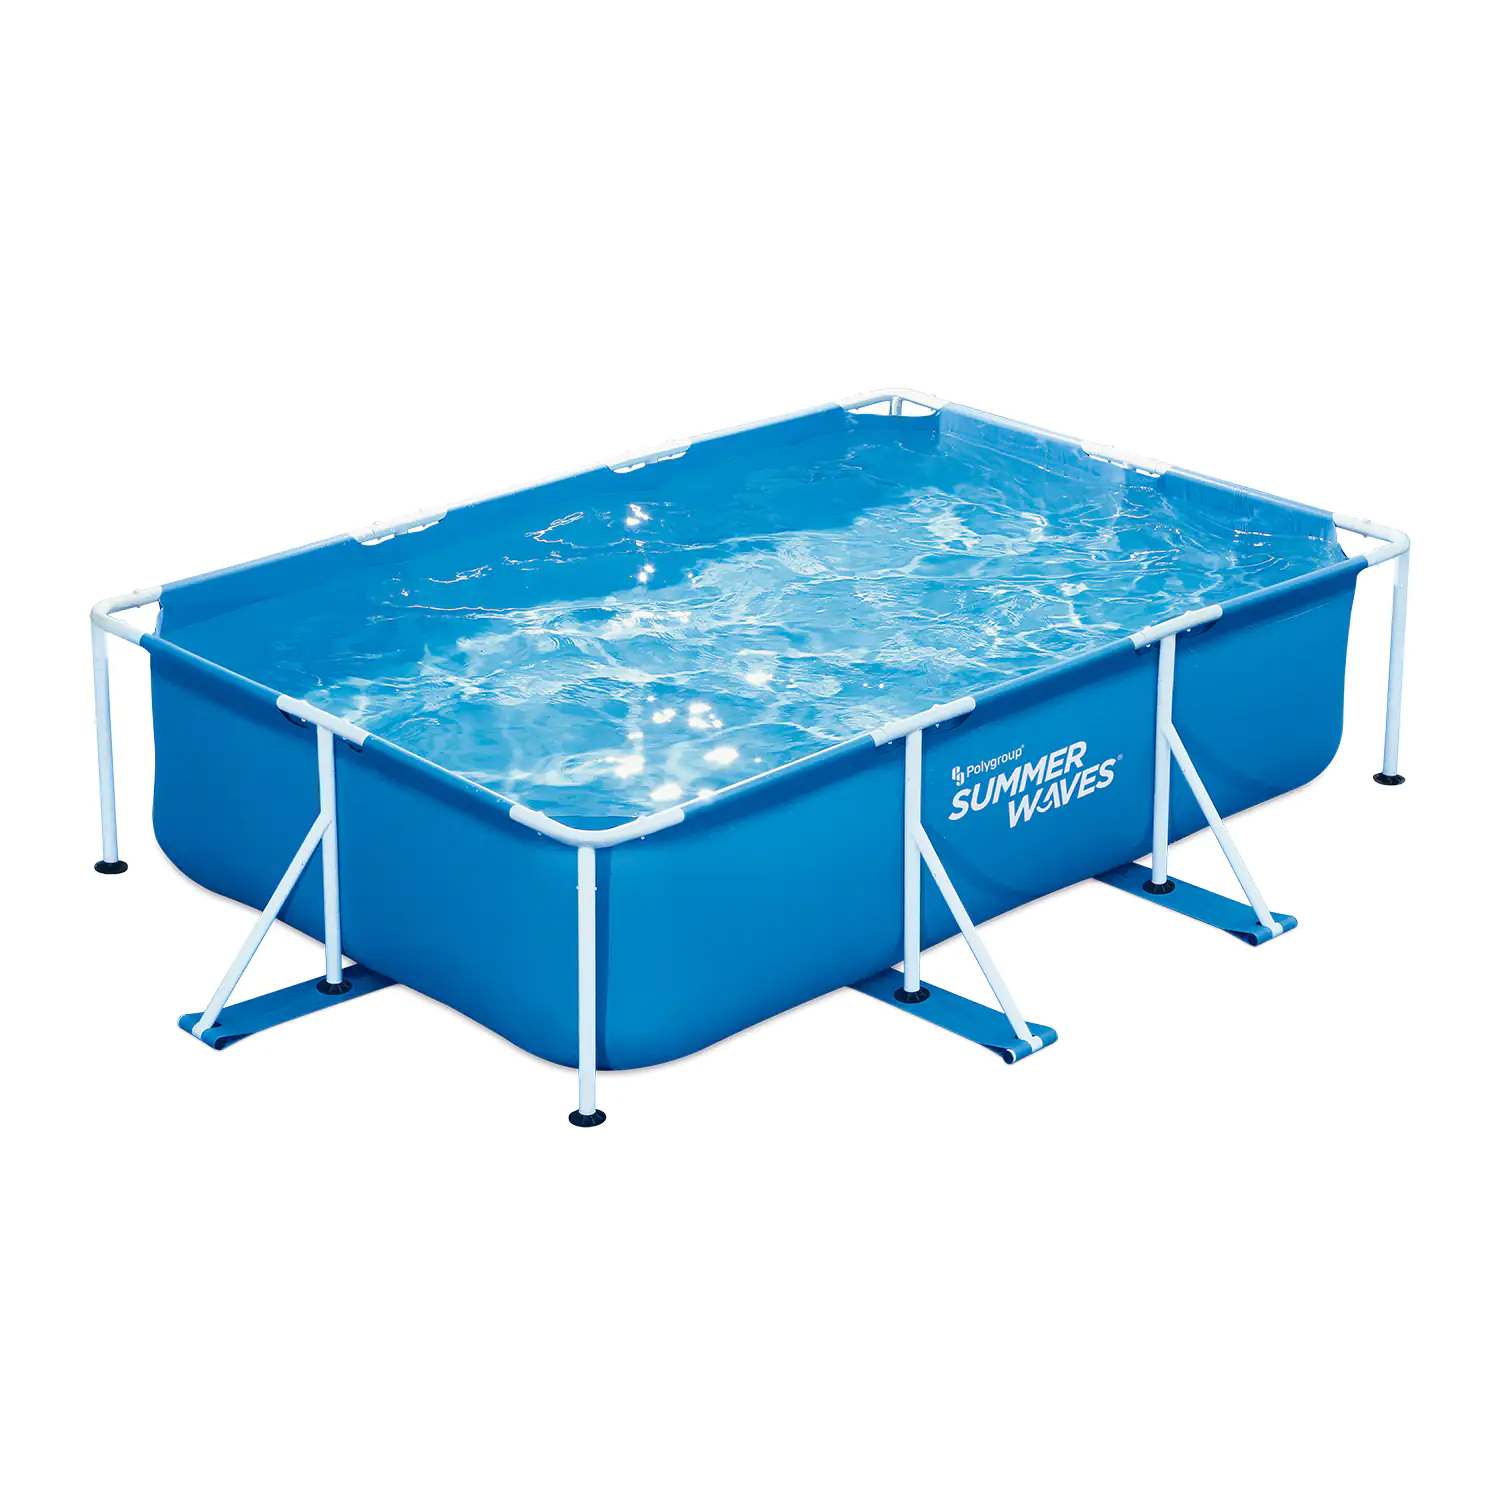 Summer Waves Pool Rectangular Metall Frame Pool 3 m x 2 m x 75 cm kaufen |  Globus Baumarkt | Tornetze